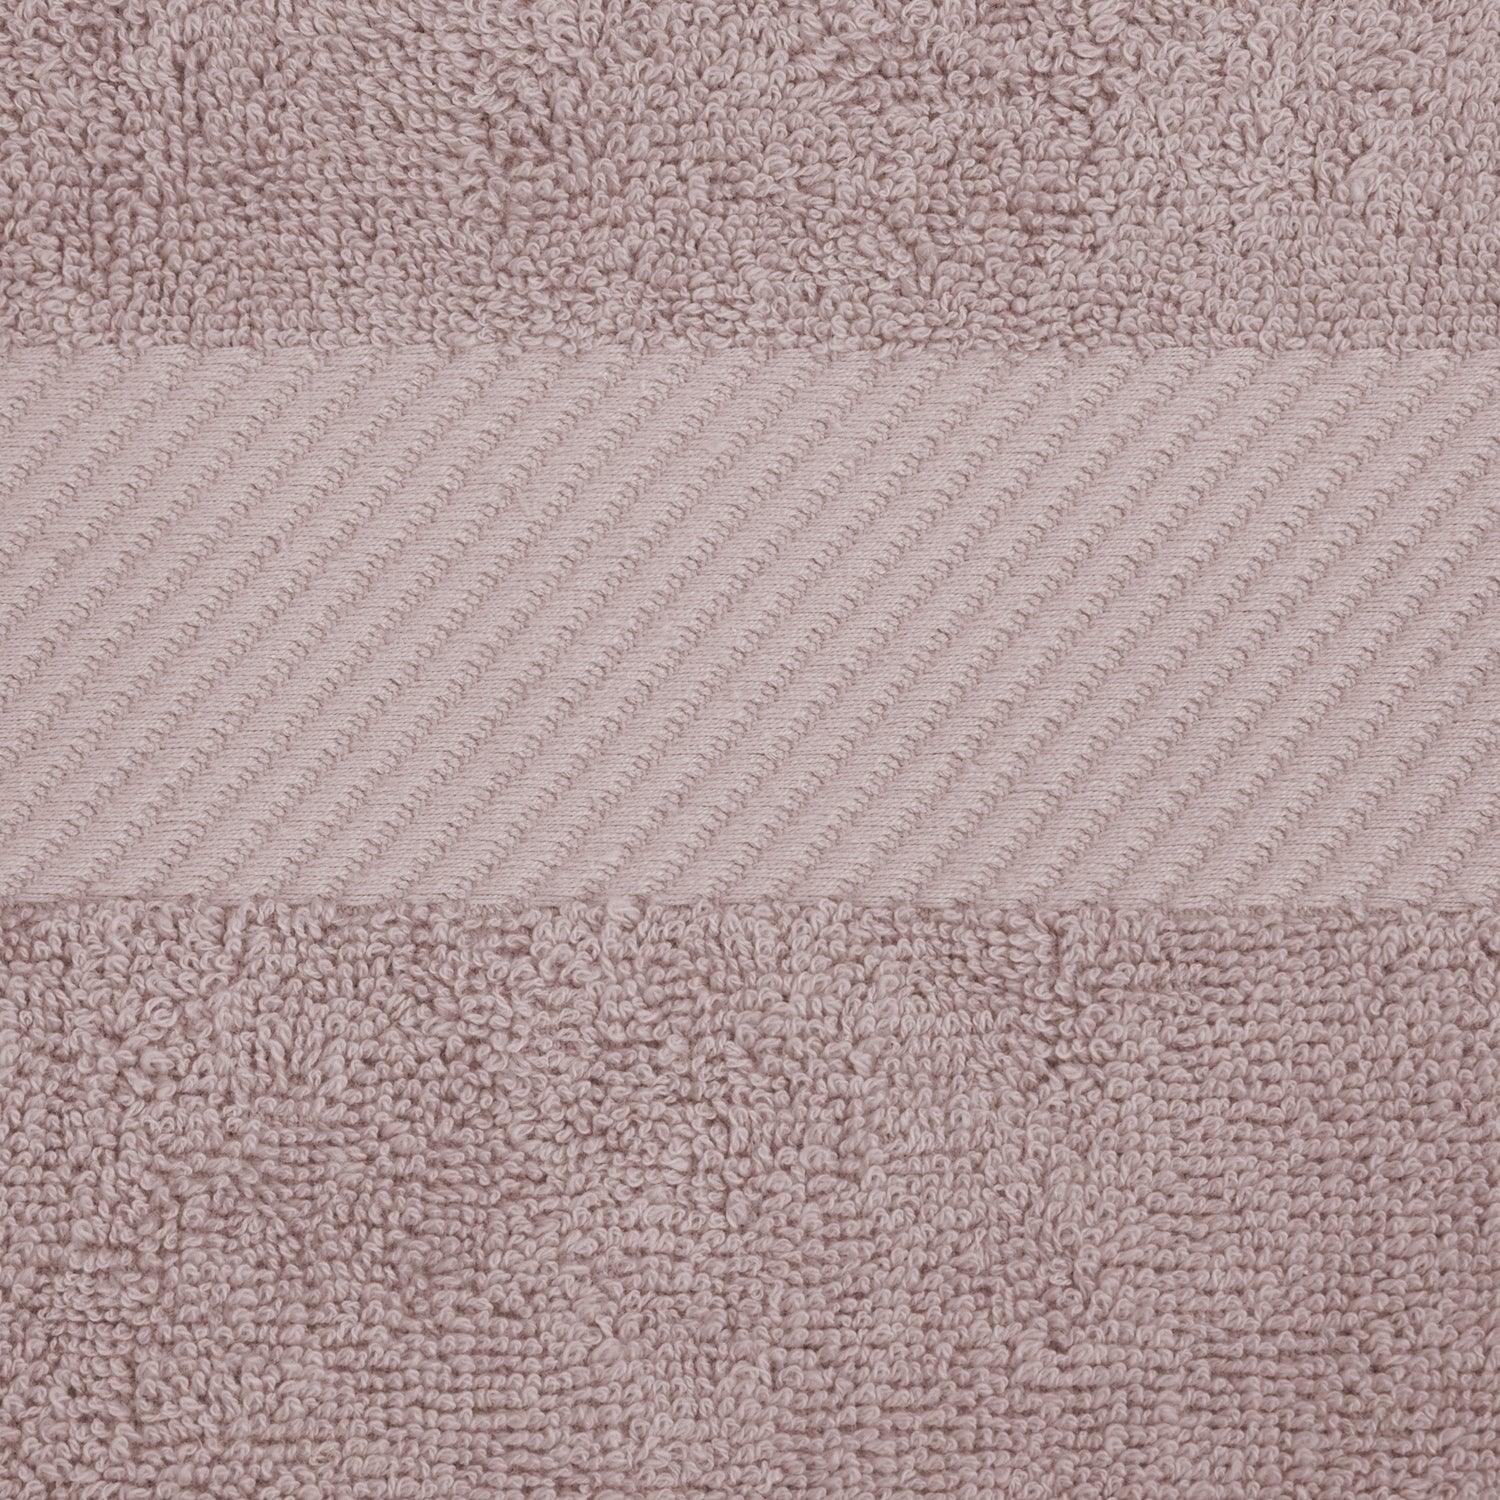 Egyptian Cotton Dobby Border Medium Weight 6 Piece Bath Towel Set - Fawn